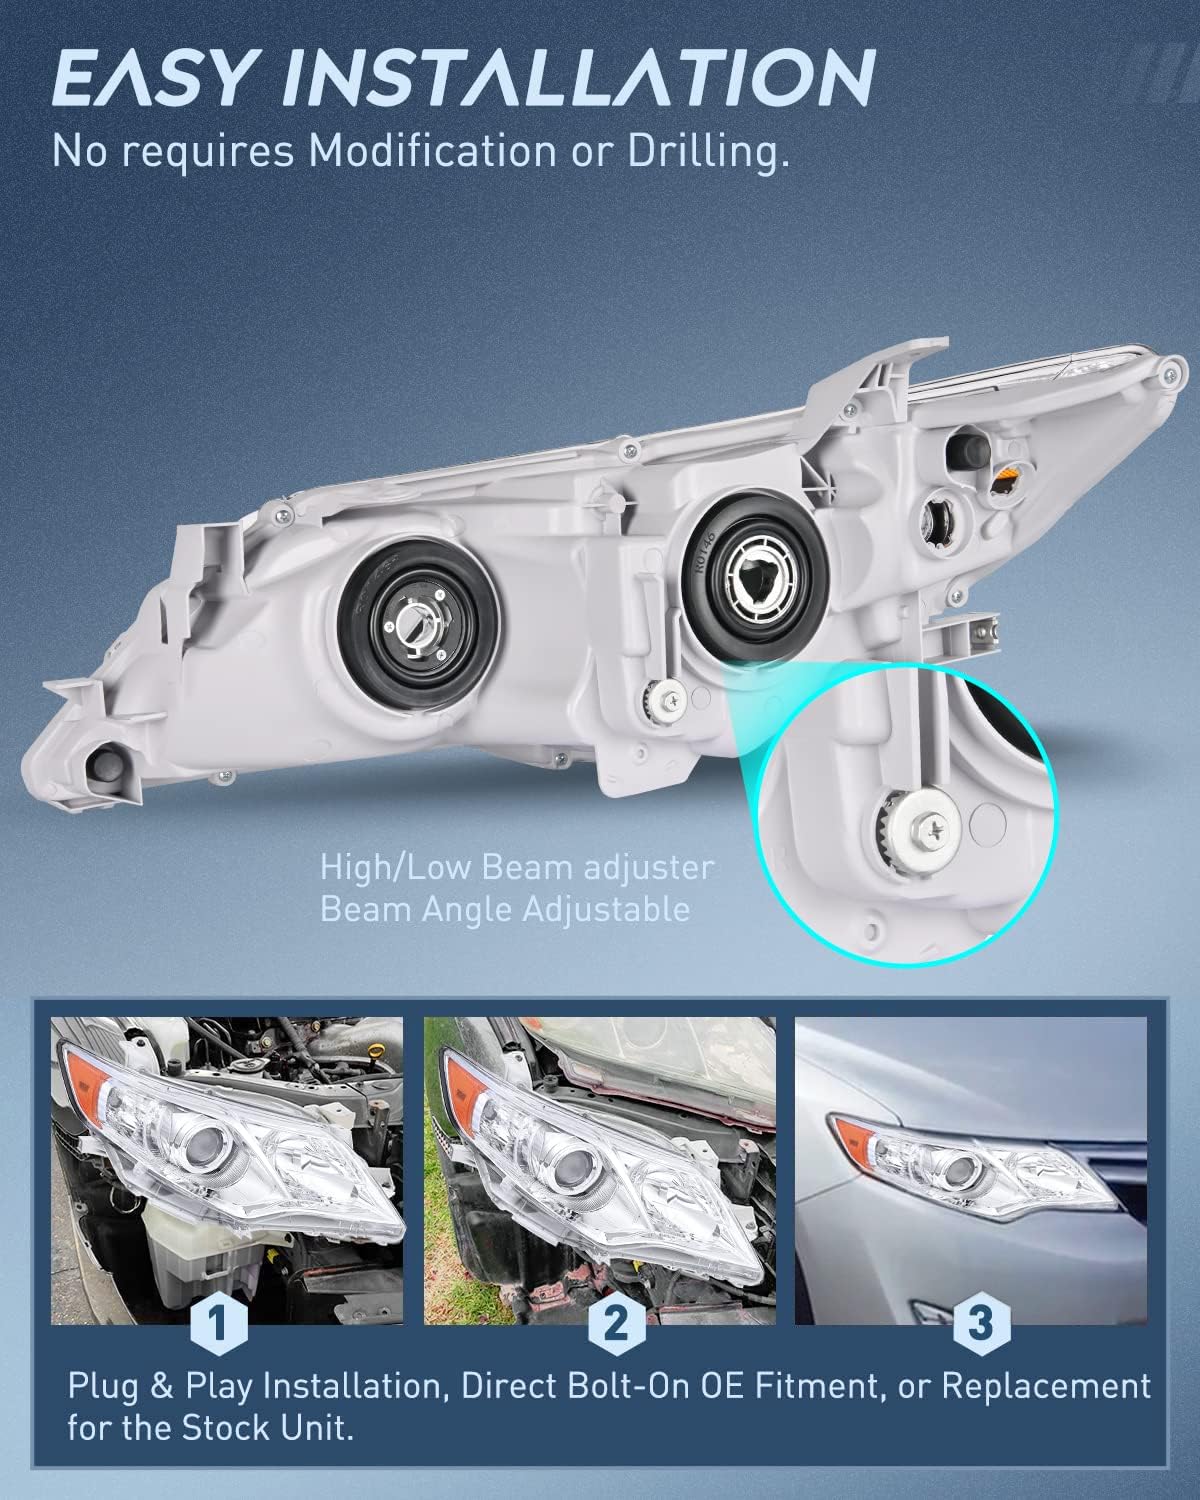 2012-2014 Toyota Camry L/LE/XLE/Hybrid LE XLE Headlight Assembly Chrome Housing Amber Reflector Clear Lens Nilight